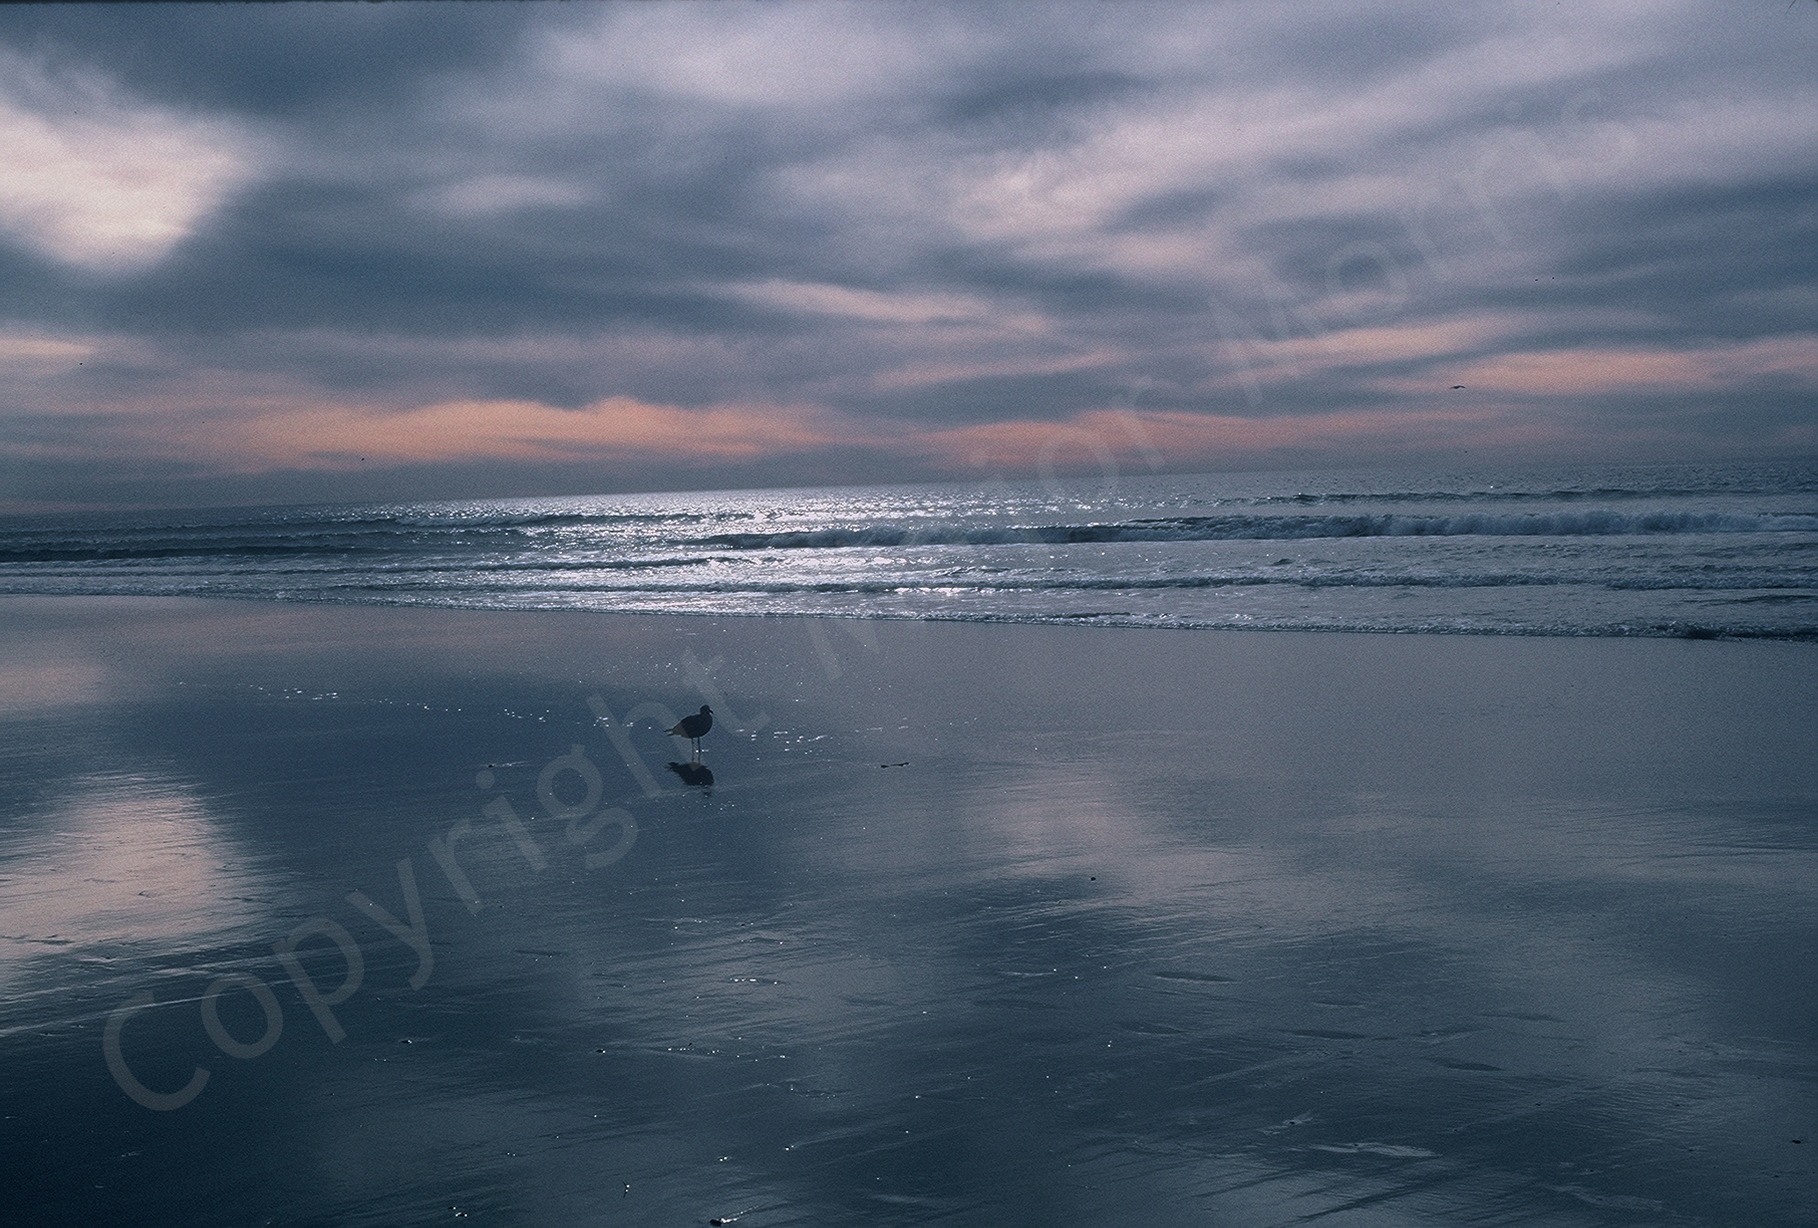   Almost Sunset - Oceanside  Color Photograph Copyright Major Morris 